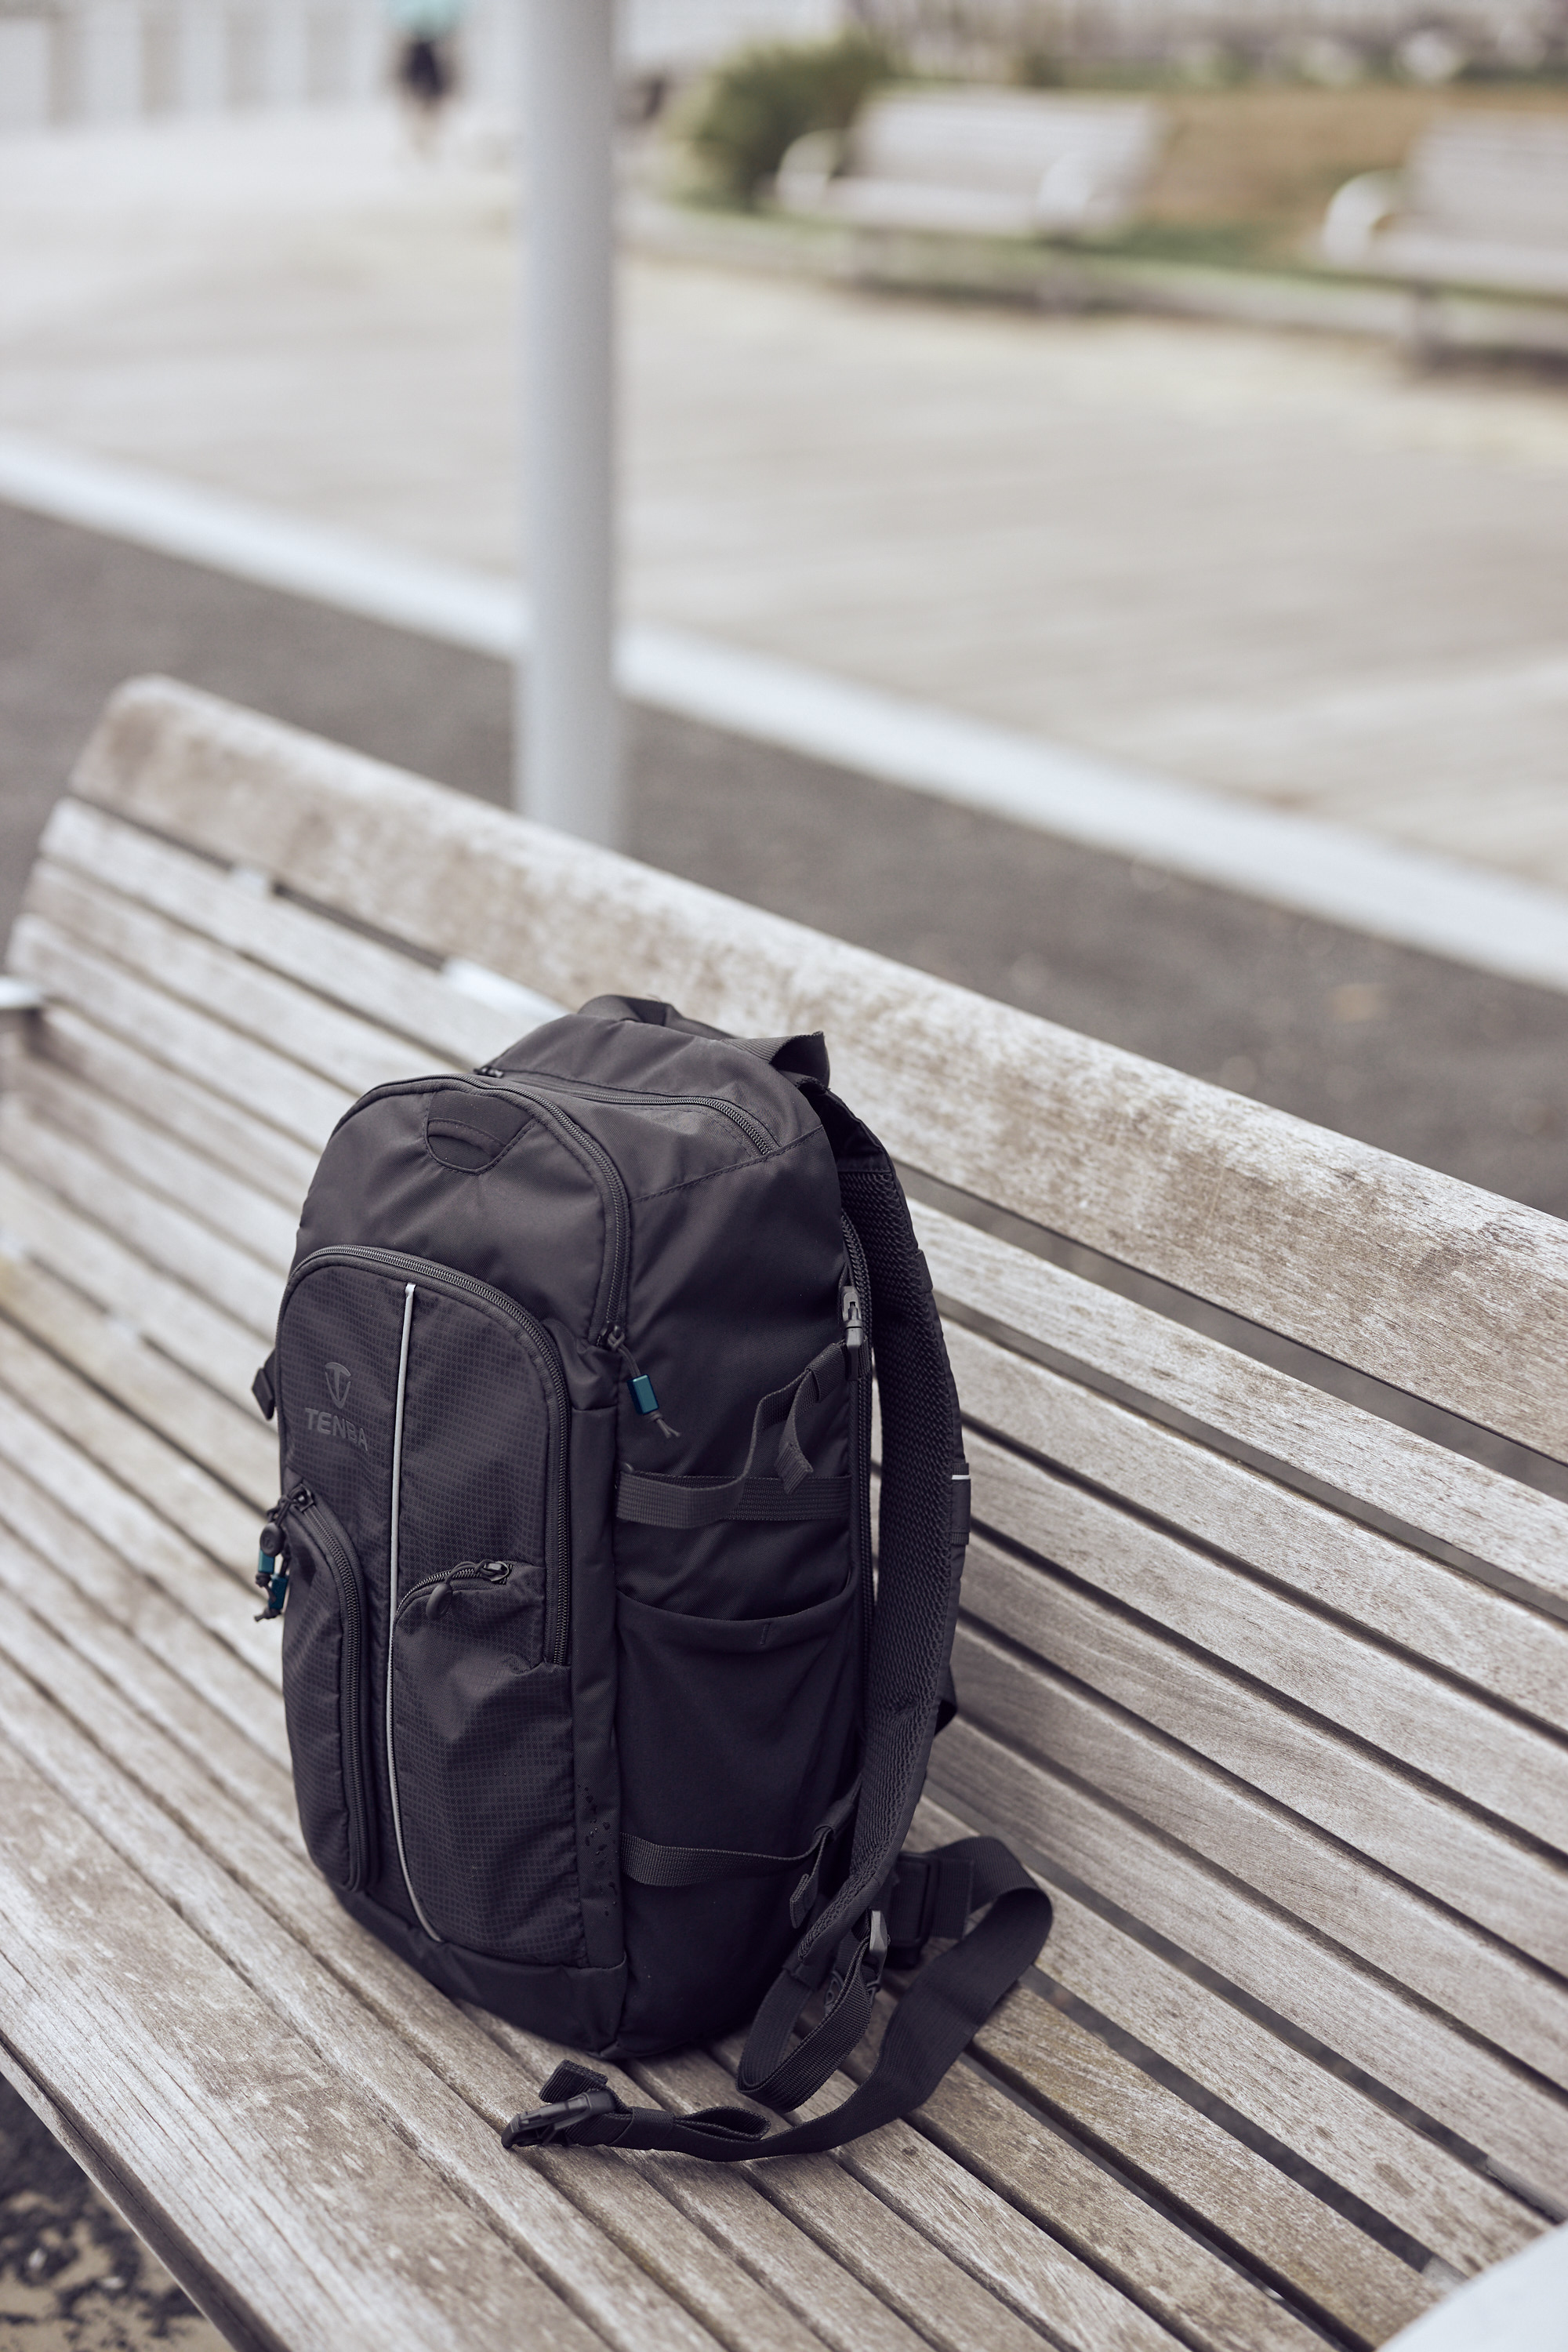 Backpack Review: In-Between Shootout (The Bag) 16L Tenba DSLR